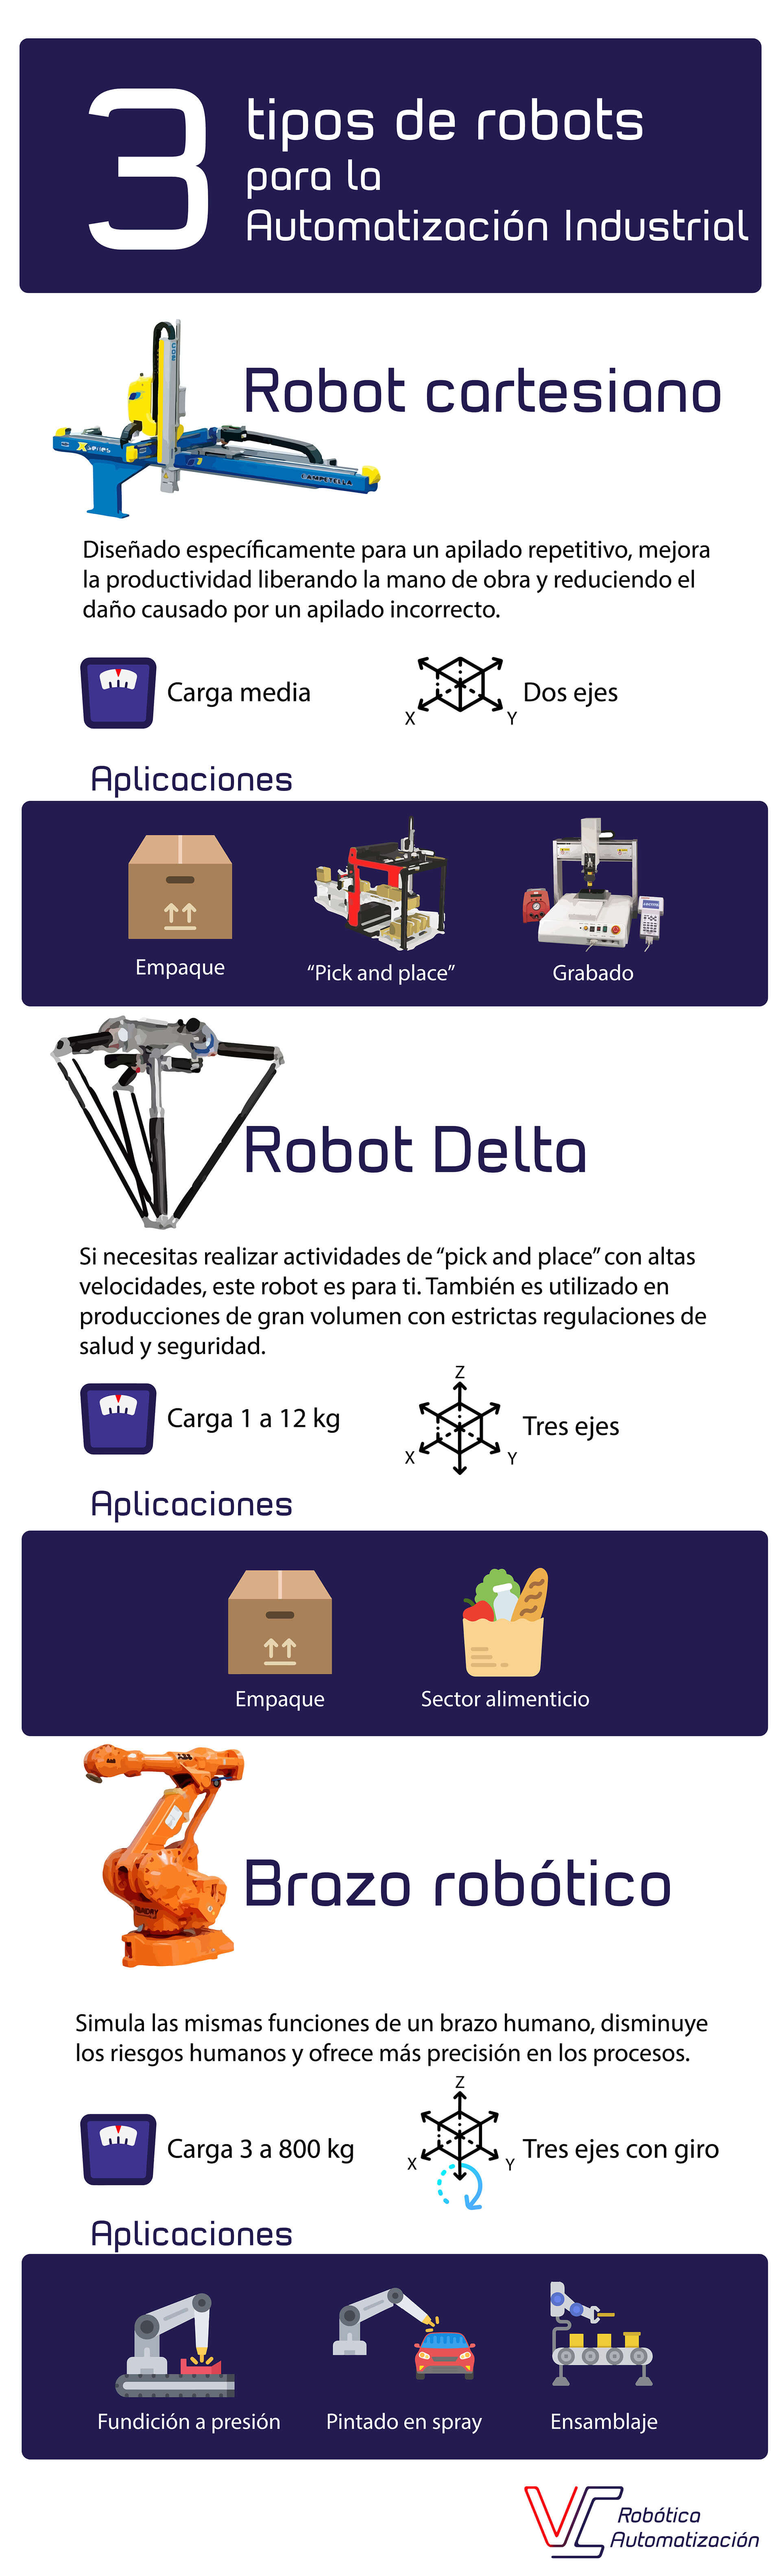 tipos de robots para automatización industrial